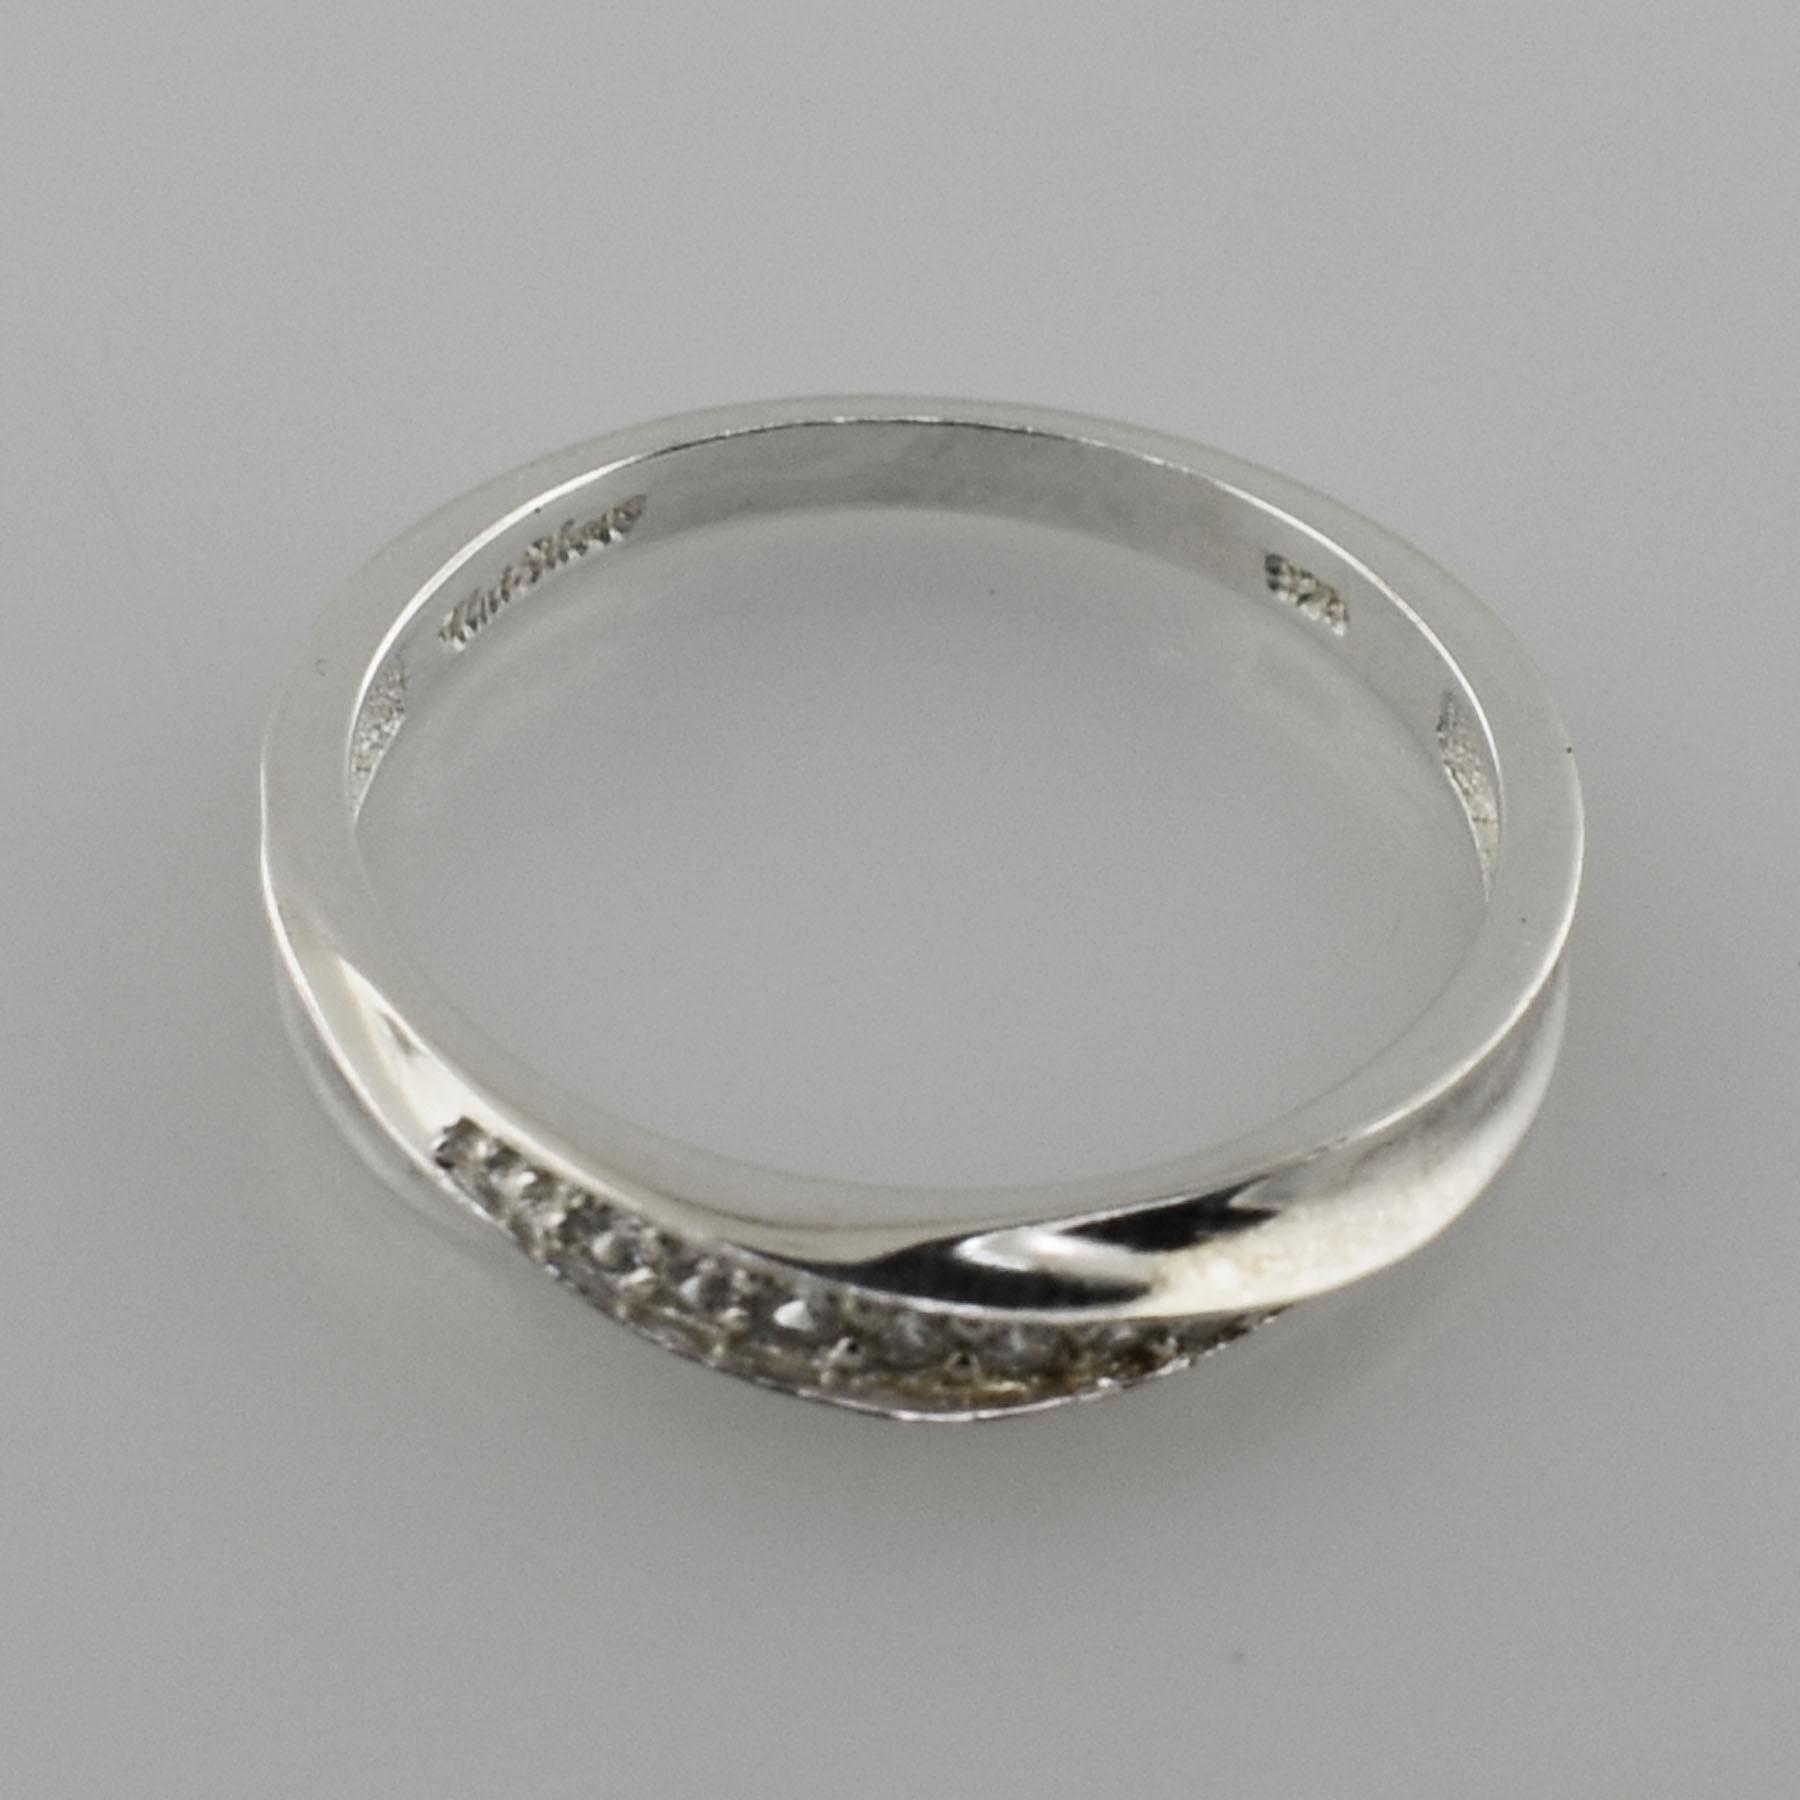 Unisilver Wedding Ring Price List Wedding Rings Sets Ideas